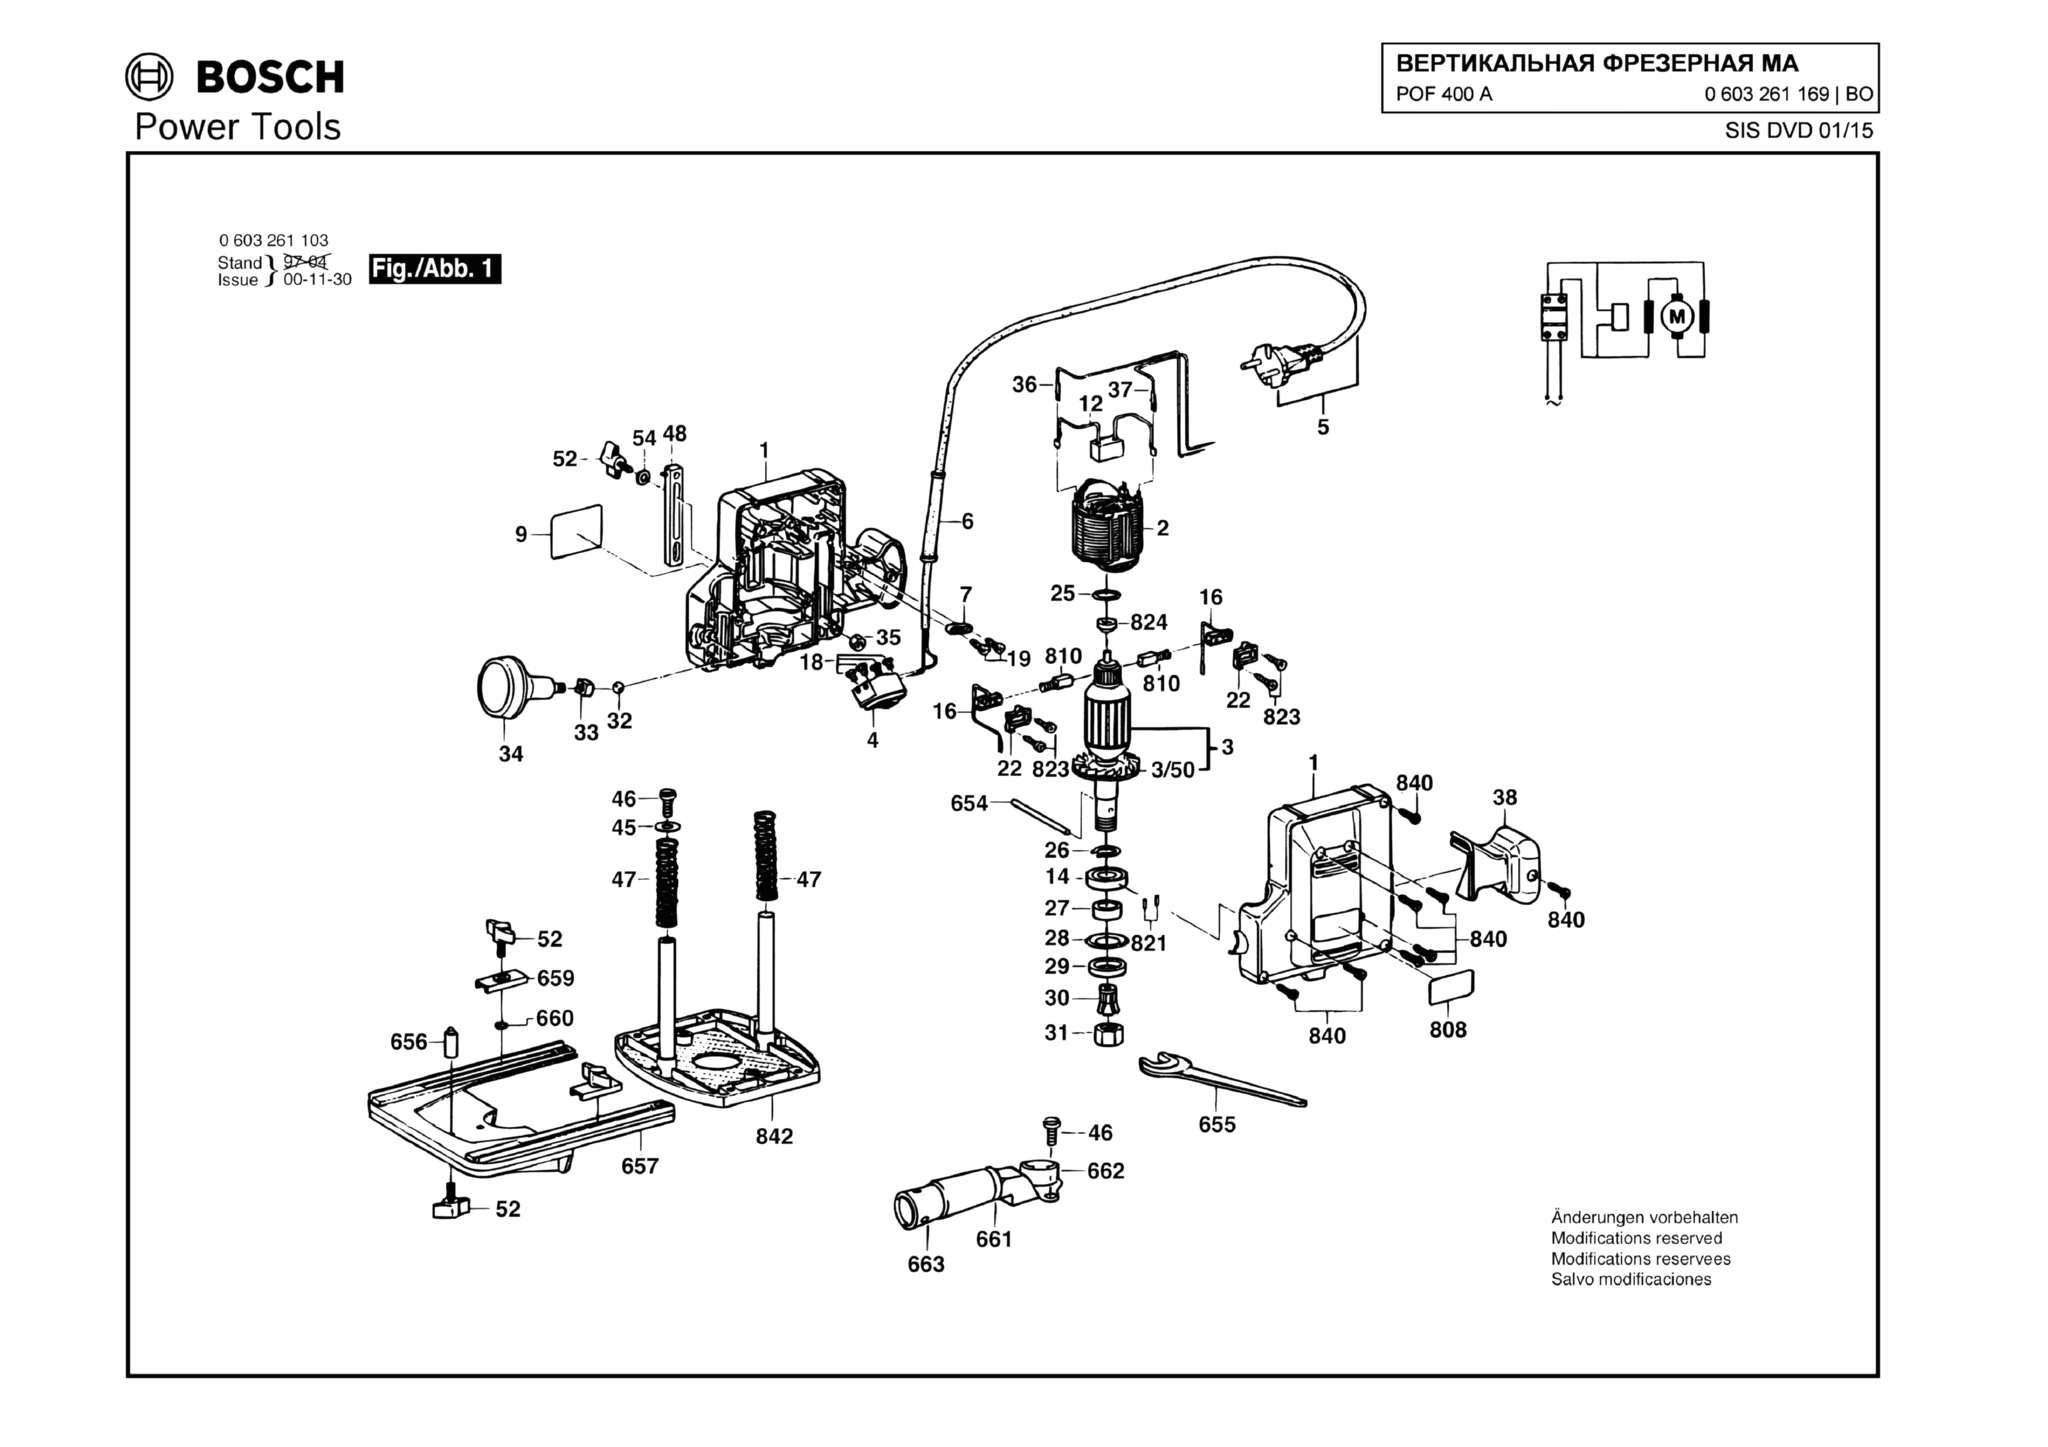 Запчасти, схема и деталировка Bosch POF 400 A (ТИП 0603261169)